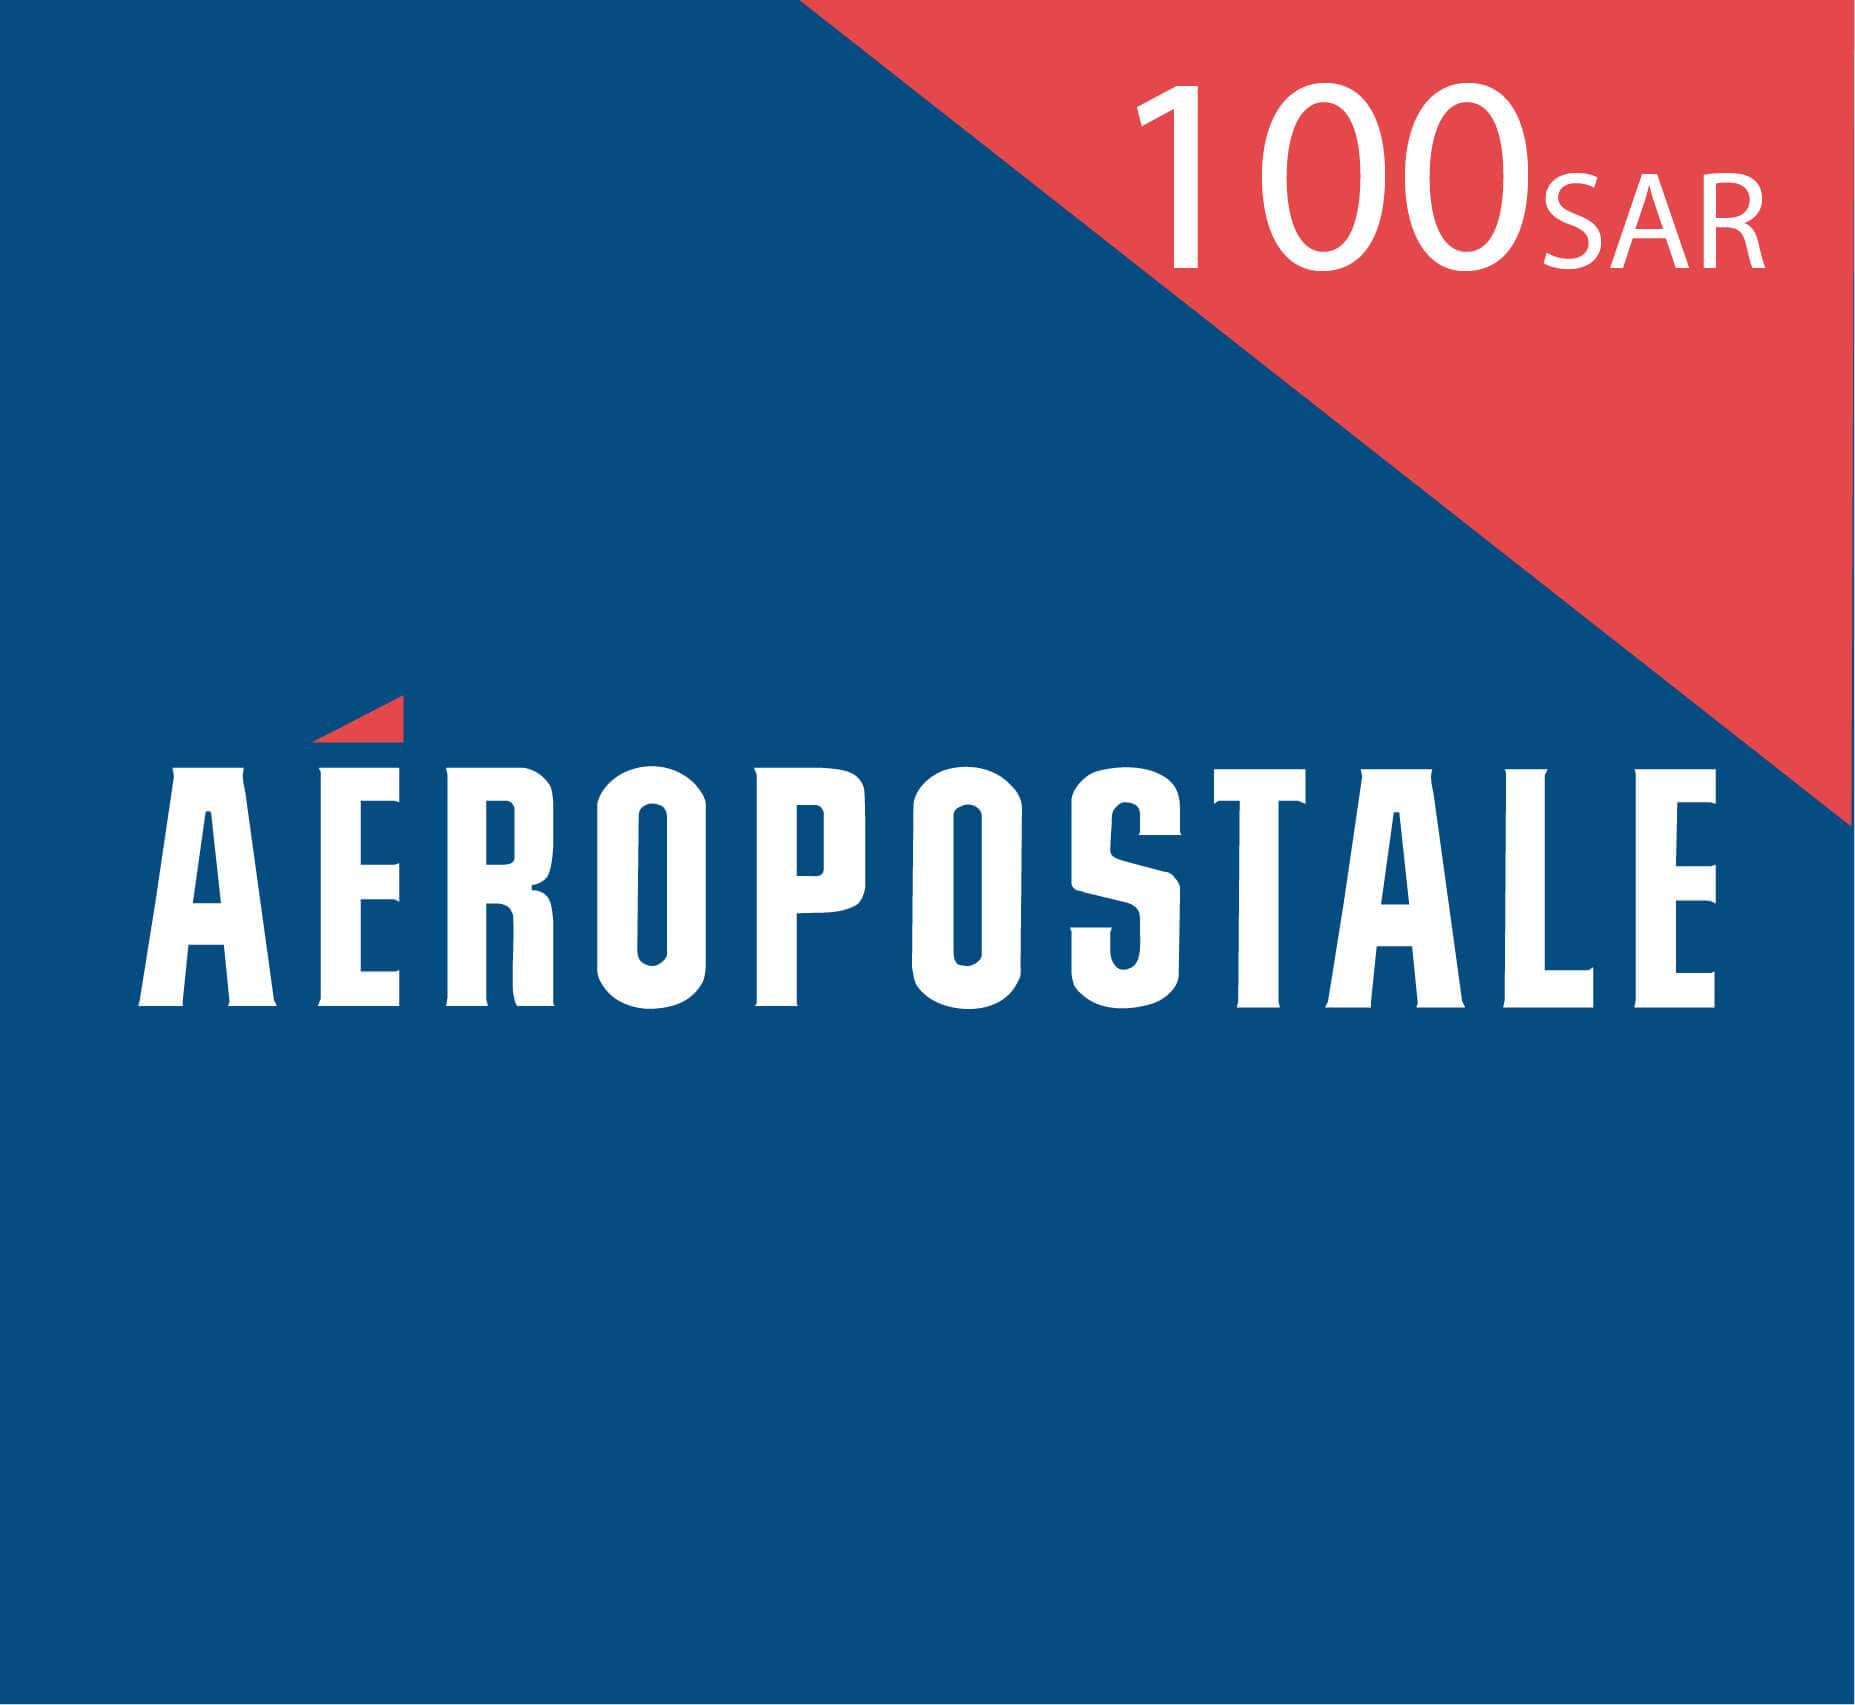 شراء بطاقة هدايا ايروبوستال Aeropostale - قسيمة شراء ايرو بوستال - 100 ريال